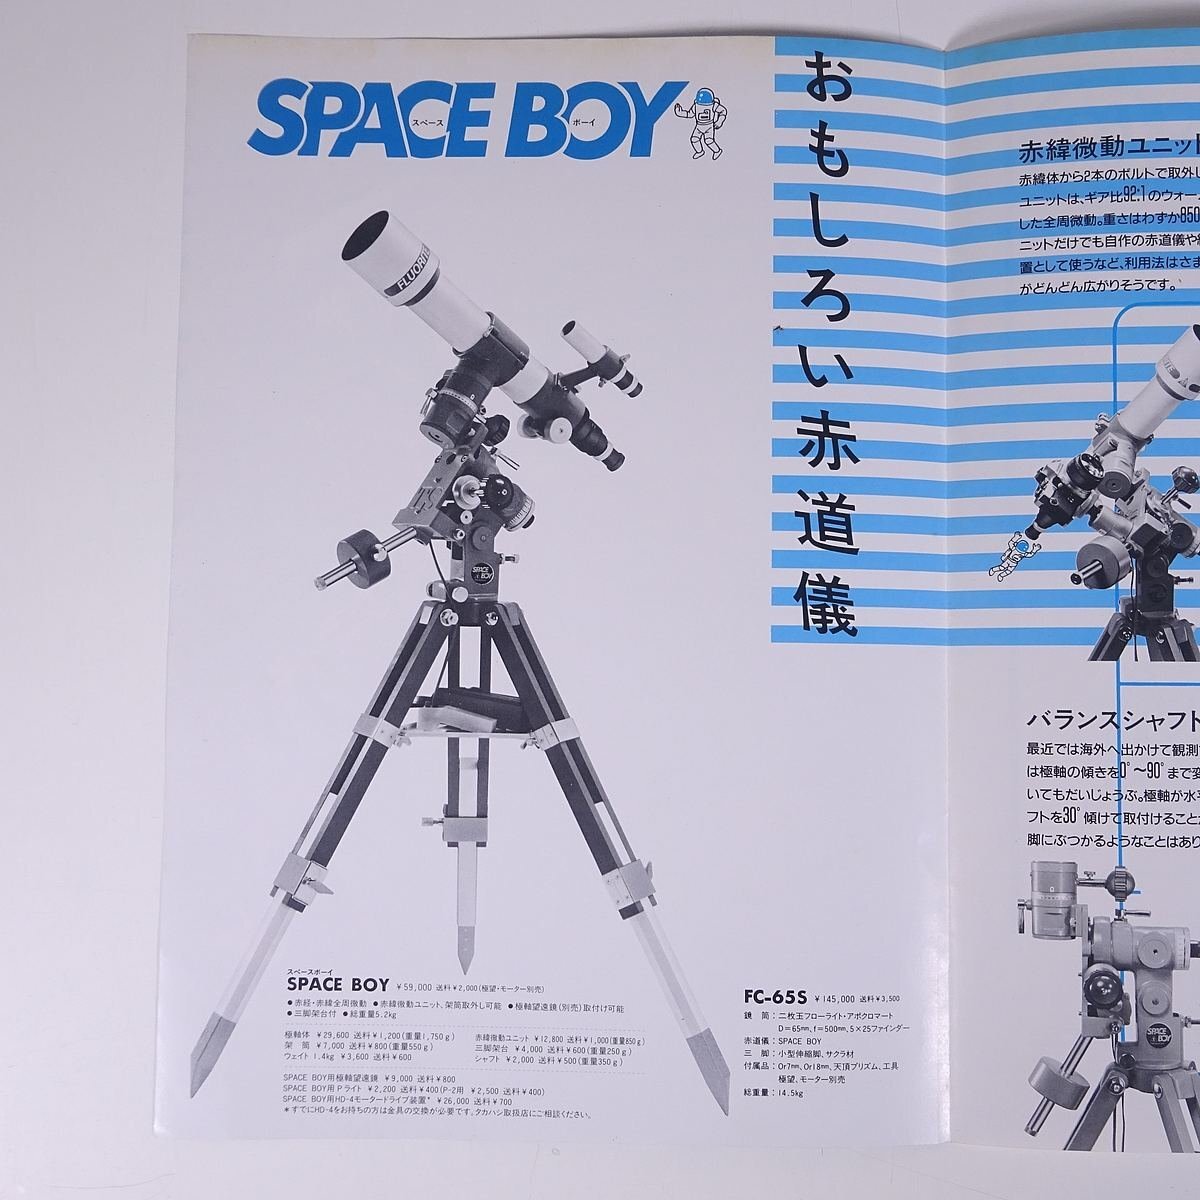 TAKAHASHItaka is siSPACE BOY Space Boy height . factory 1985 Showa era small booklet catalog pamphlet heaven body telescope heaven body ..